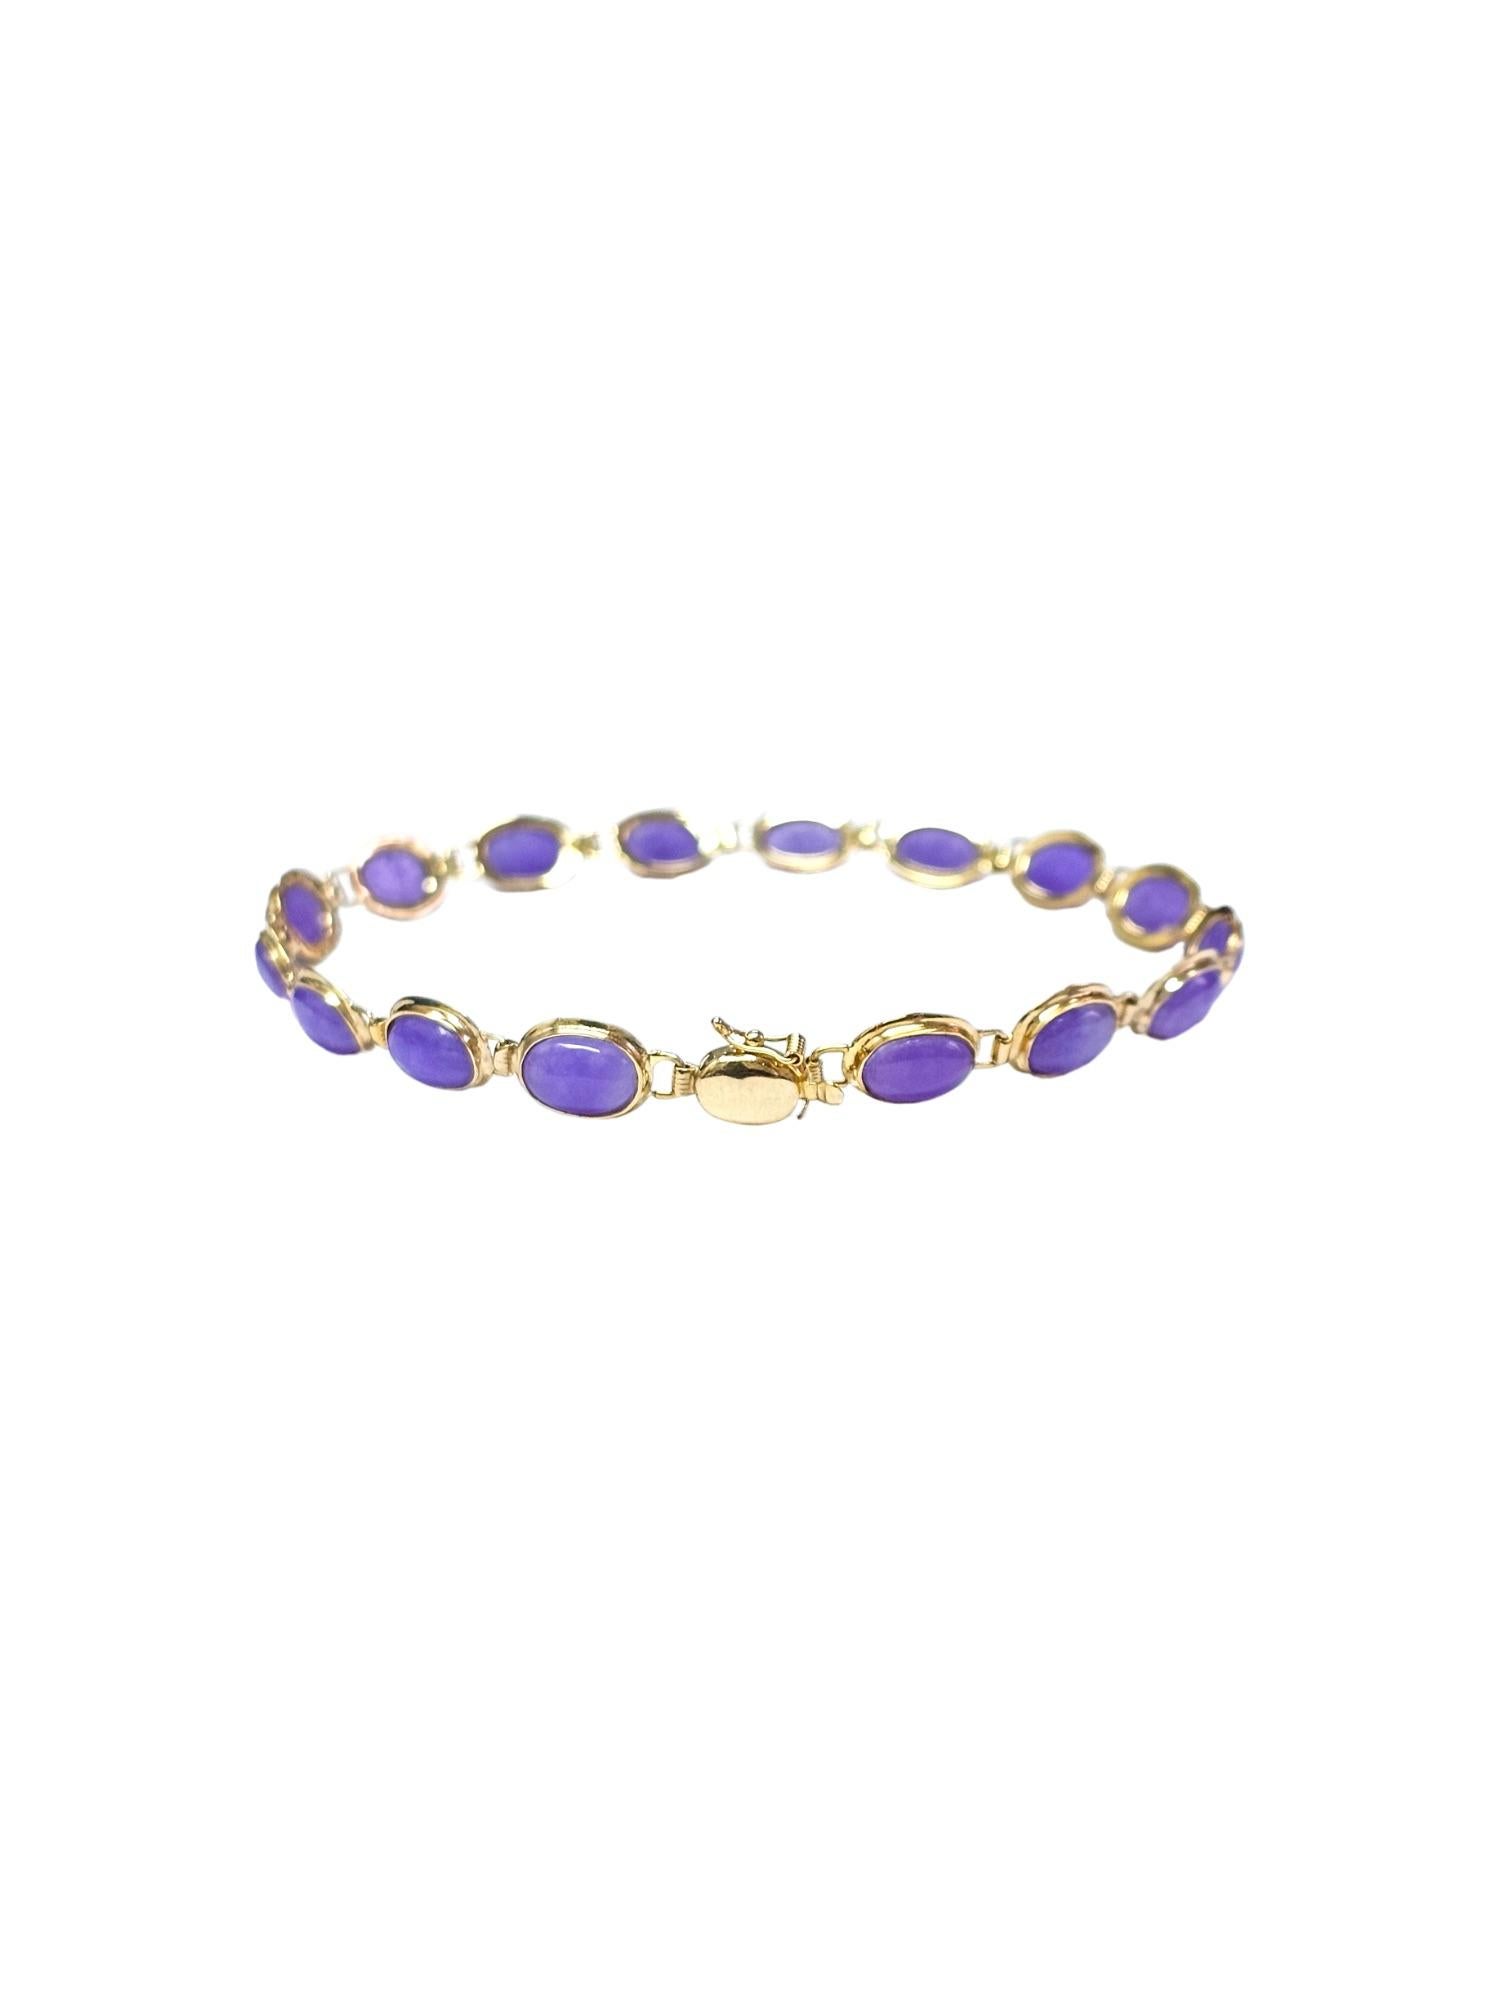 Tibetan Purple Lavender Jadeite Beaded Bracelet (with 14K Solid Yellow Gold) For Sale 3